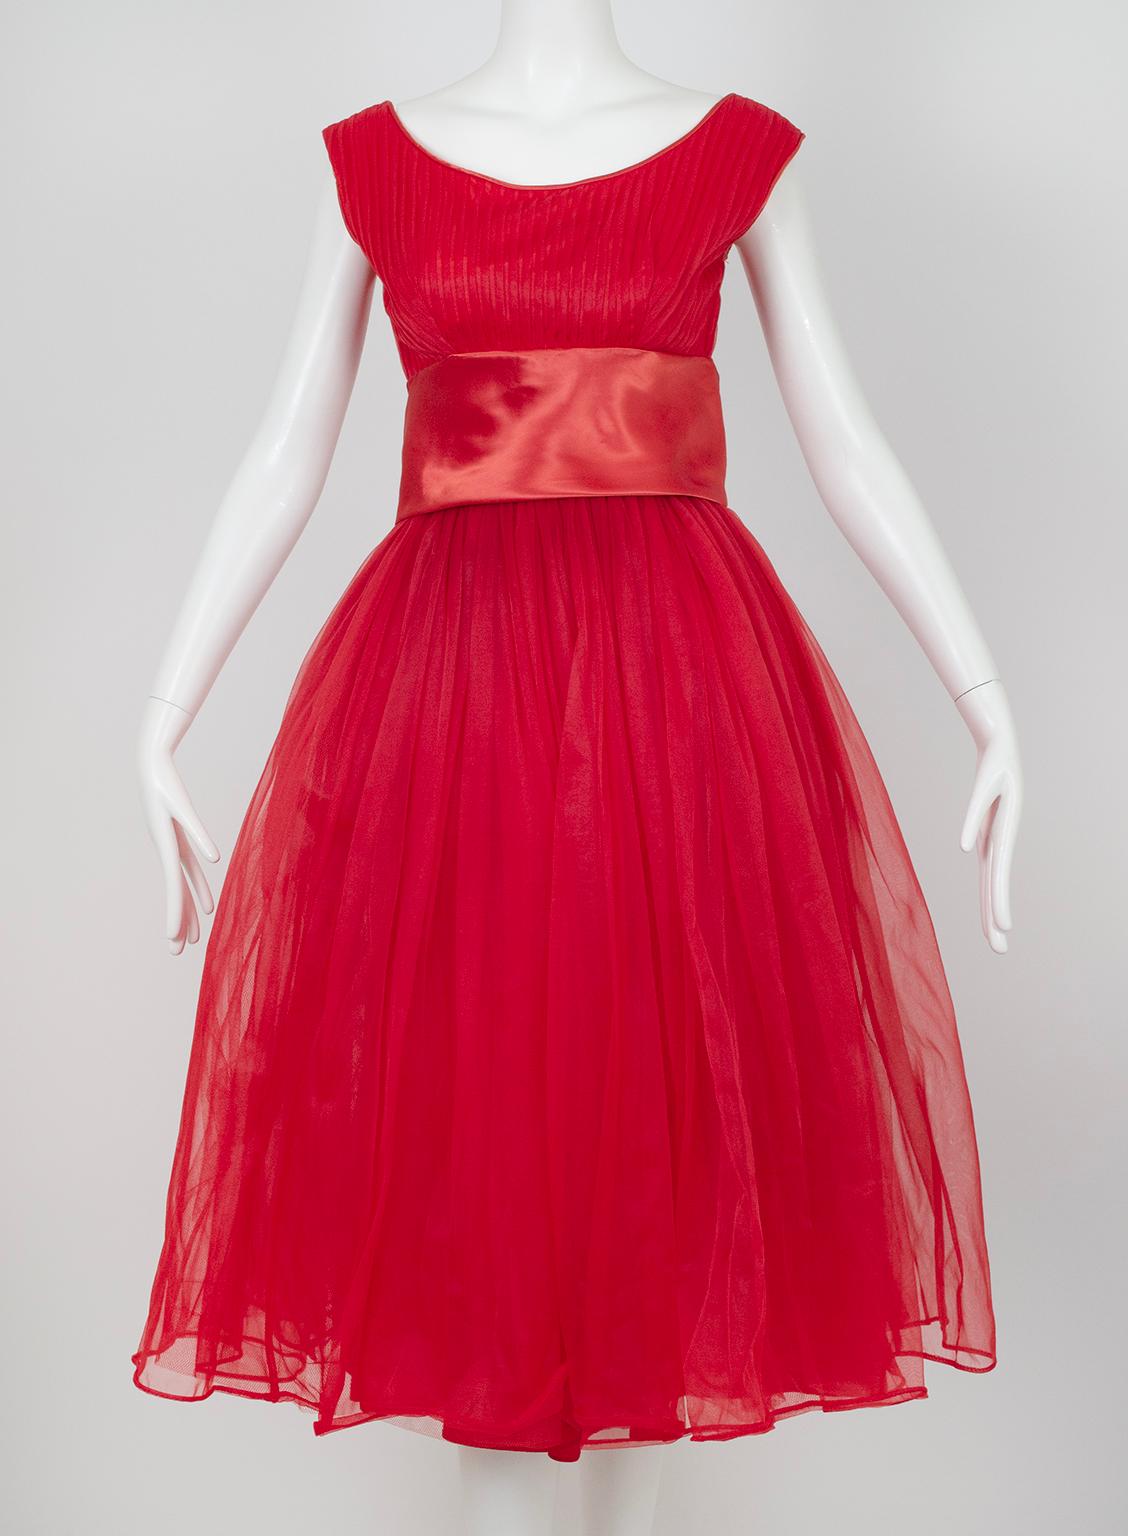 Emma Domb Red Bib Front Ballerina Party Dress with Satin Cummerbund – S, 1950s In Good Condition For Sale In Tucson, AZ